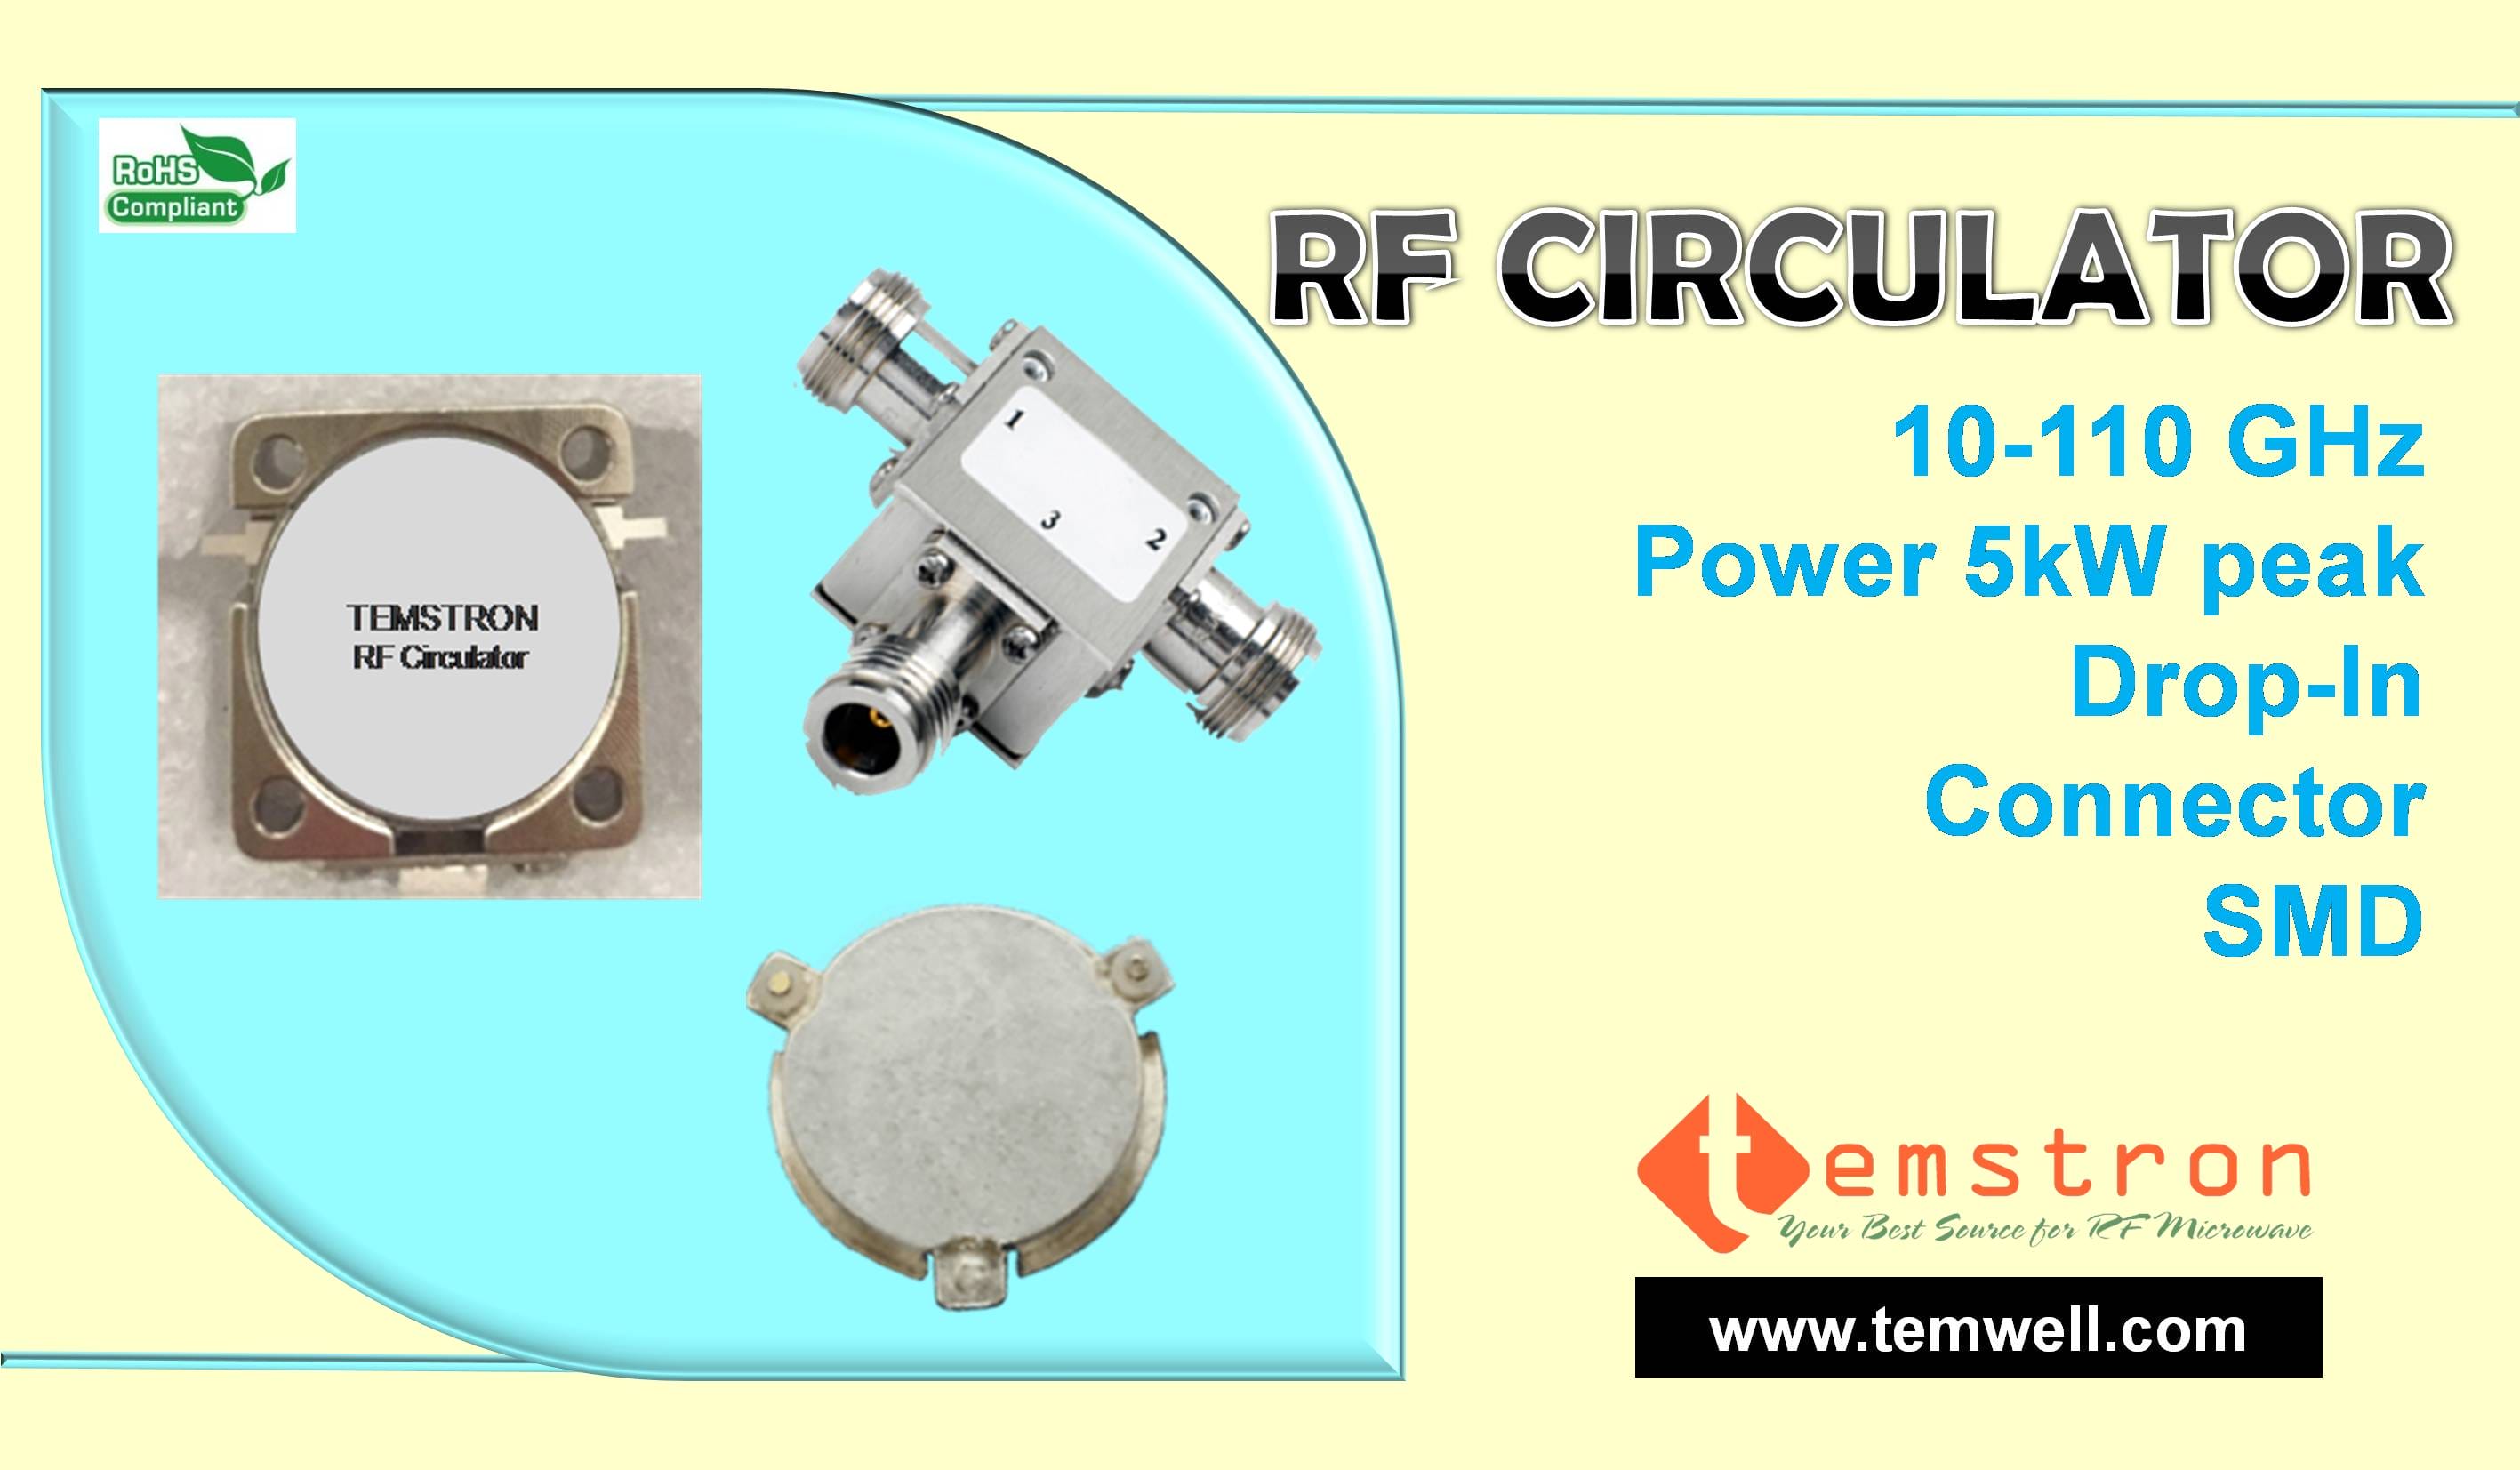 High Power RF Circulator by Temwell®